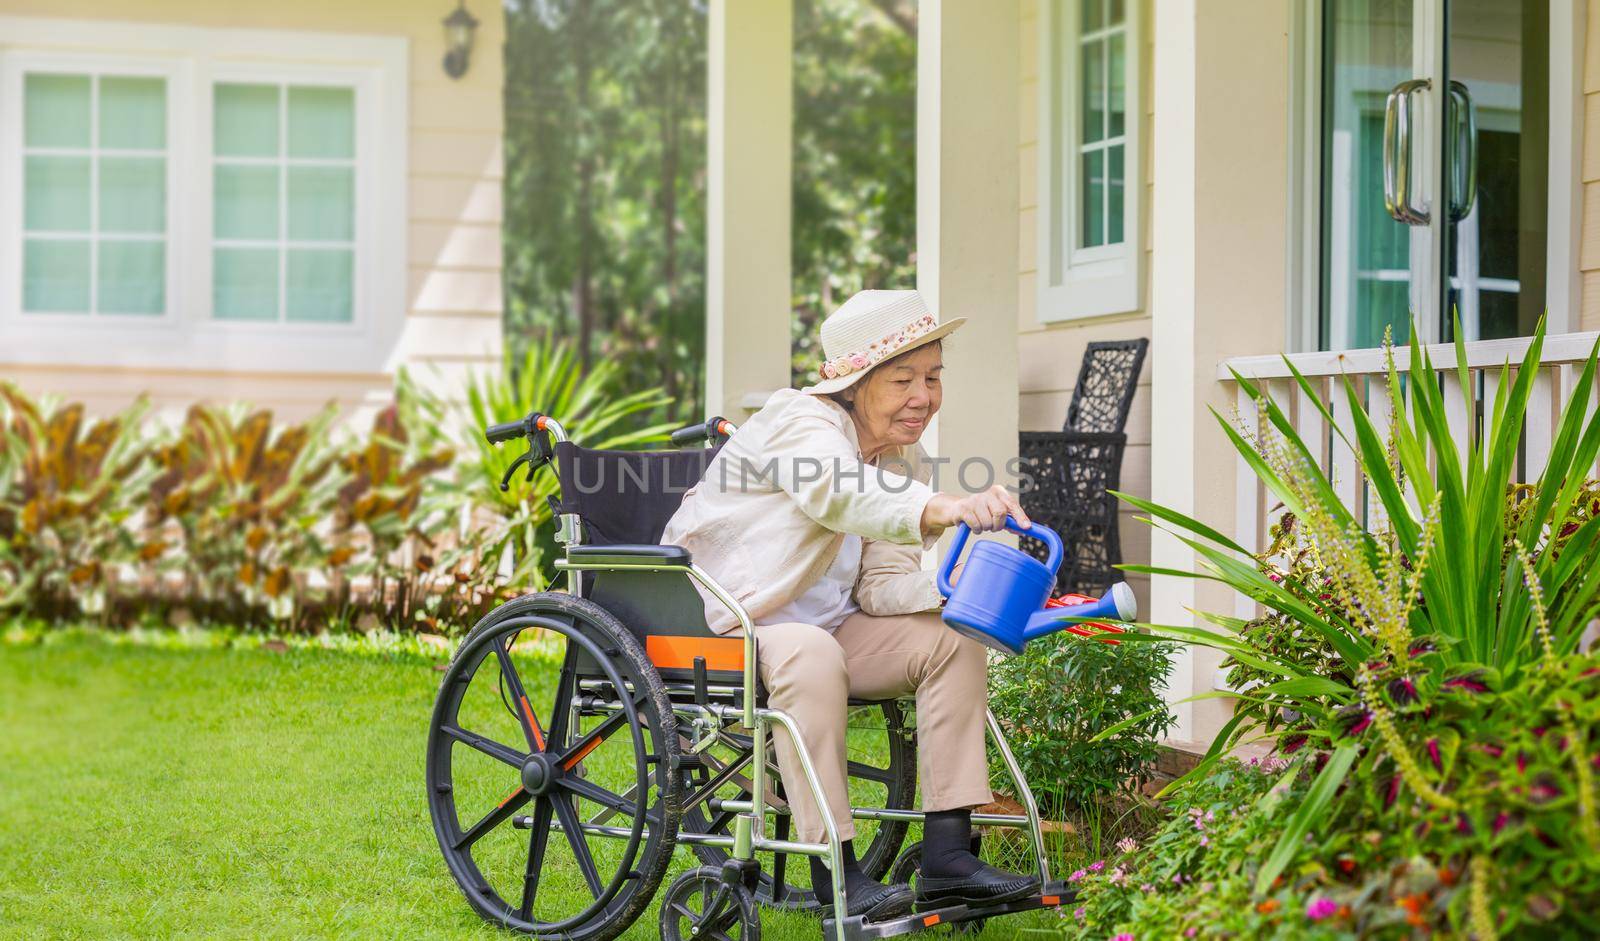 Elderly woman relax with gardening in backyard